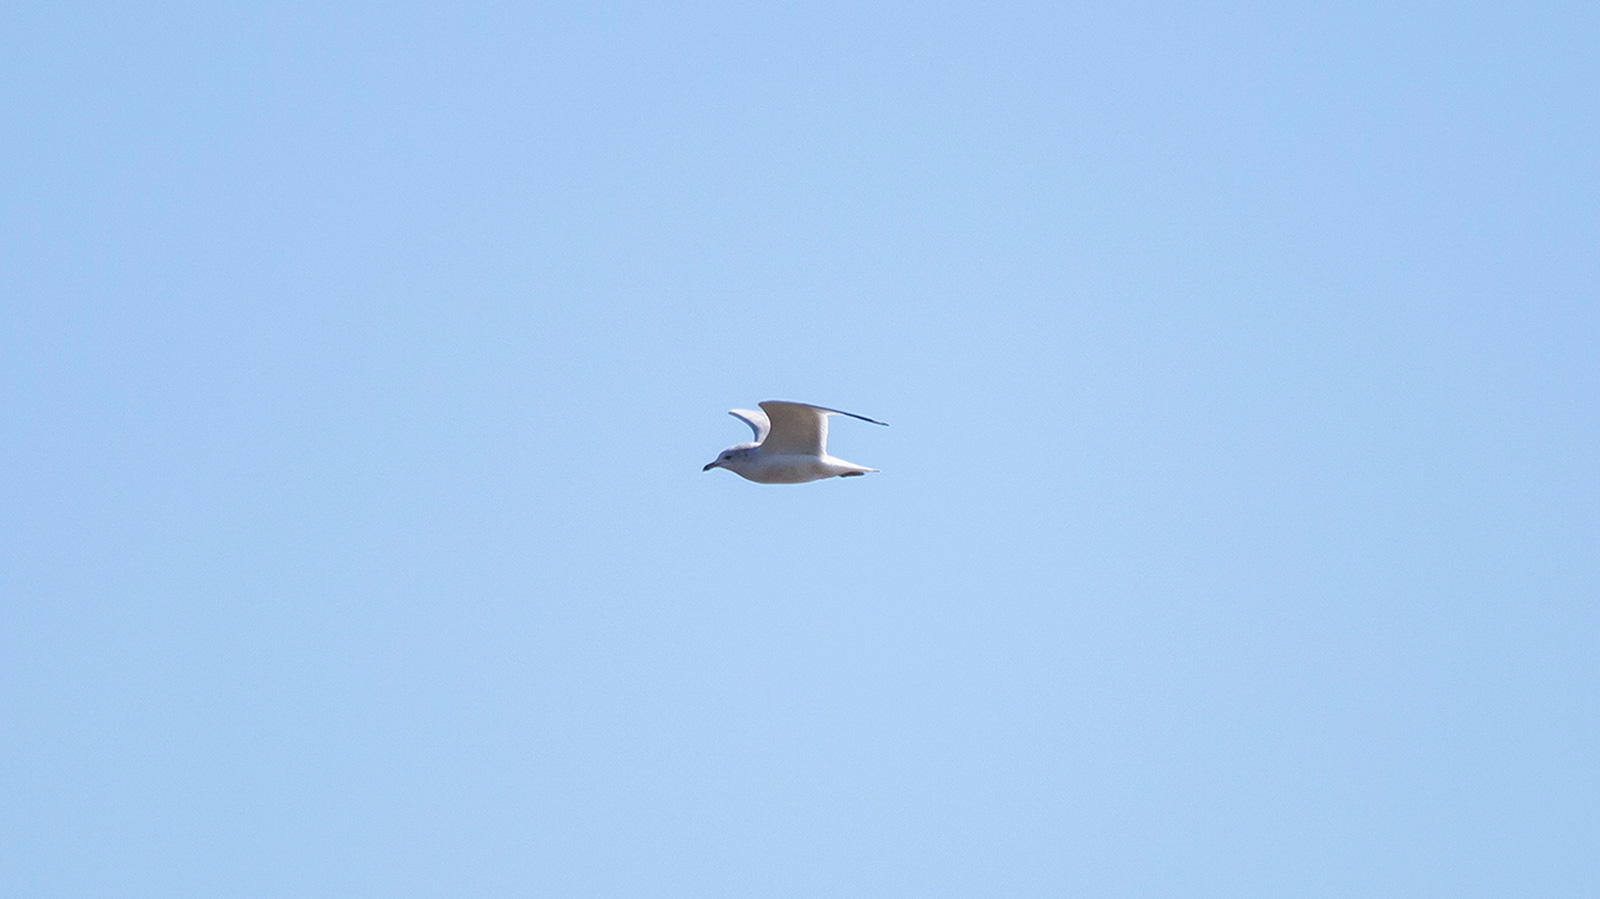 Ring-billed gull flying through blue sky